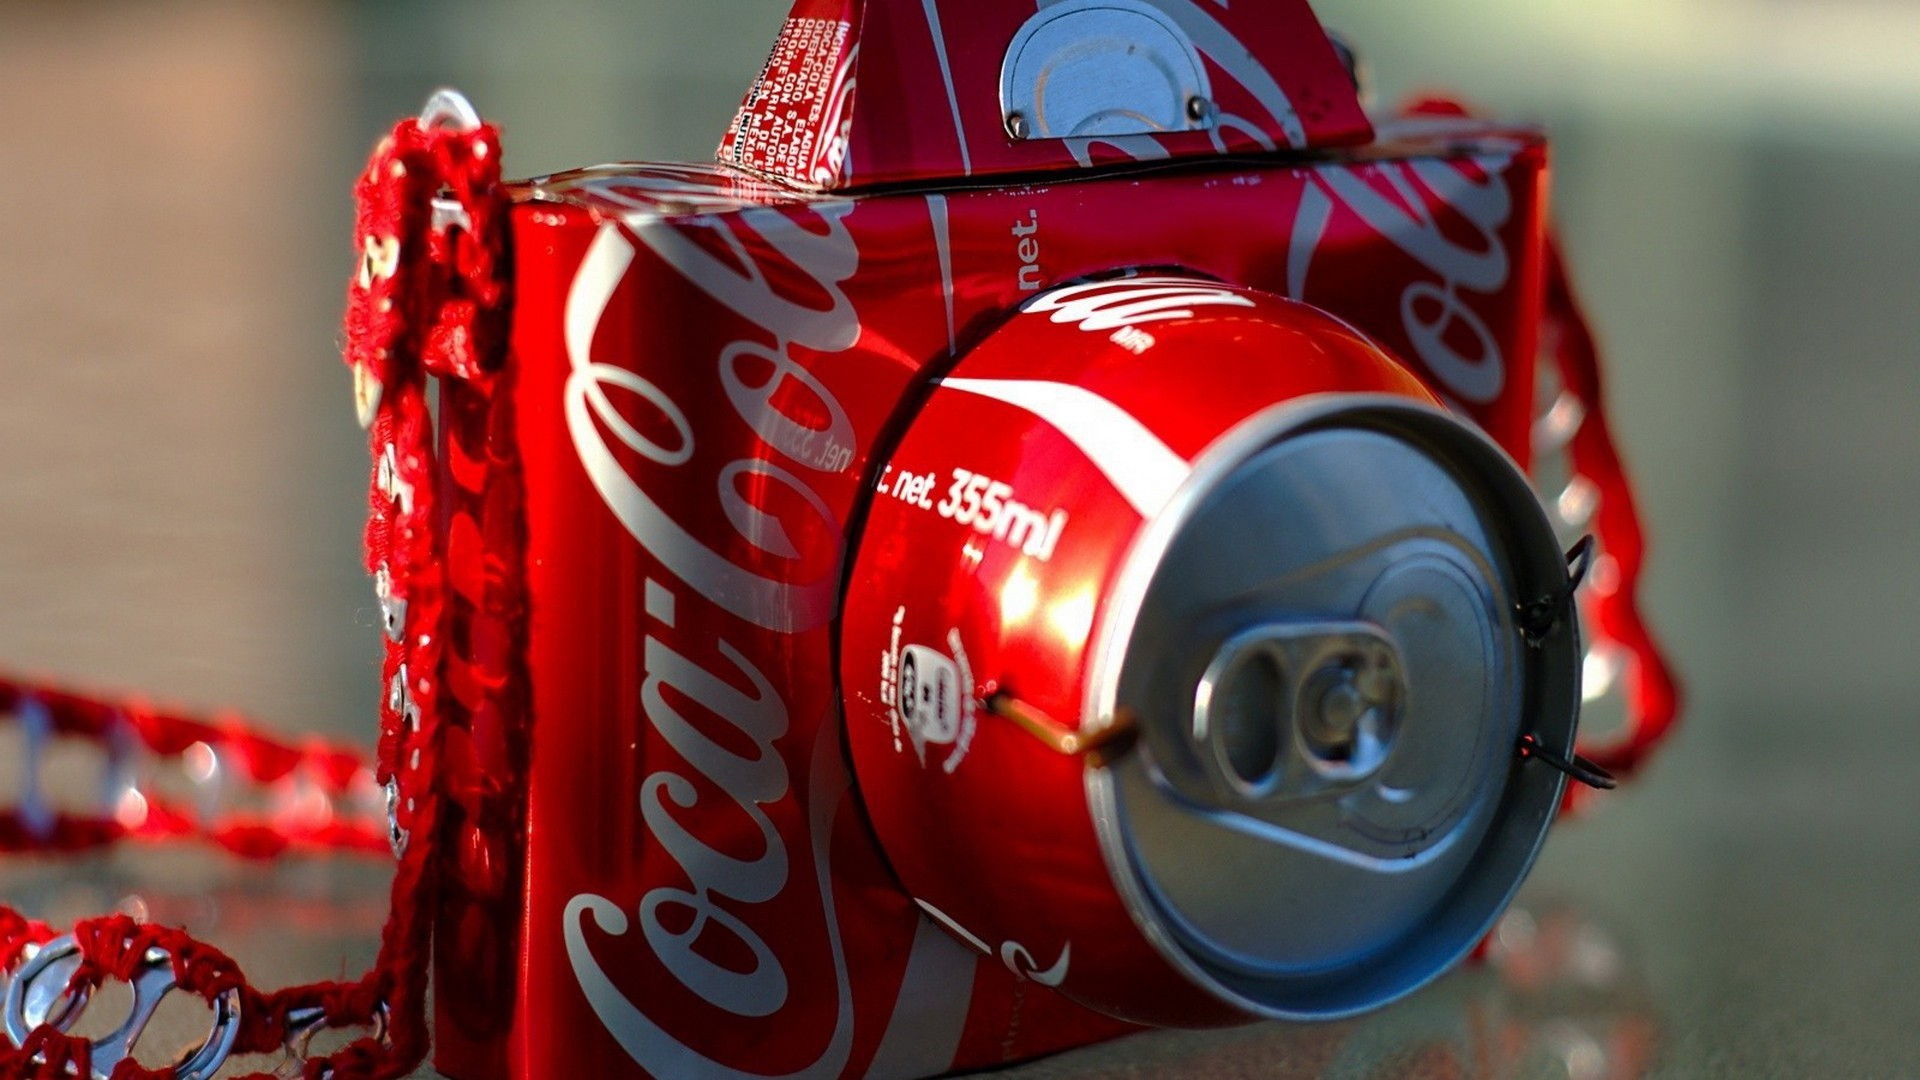 General 1920x1080 camera Coca-Cola can depth of field red creativity brand